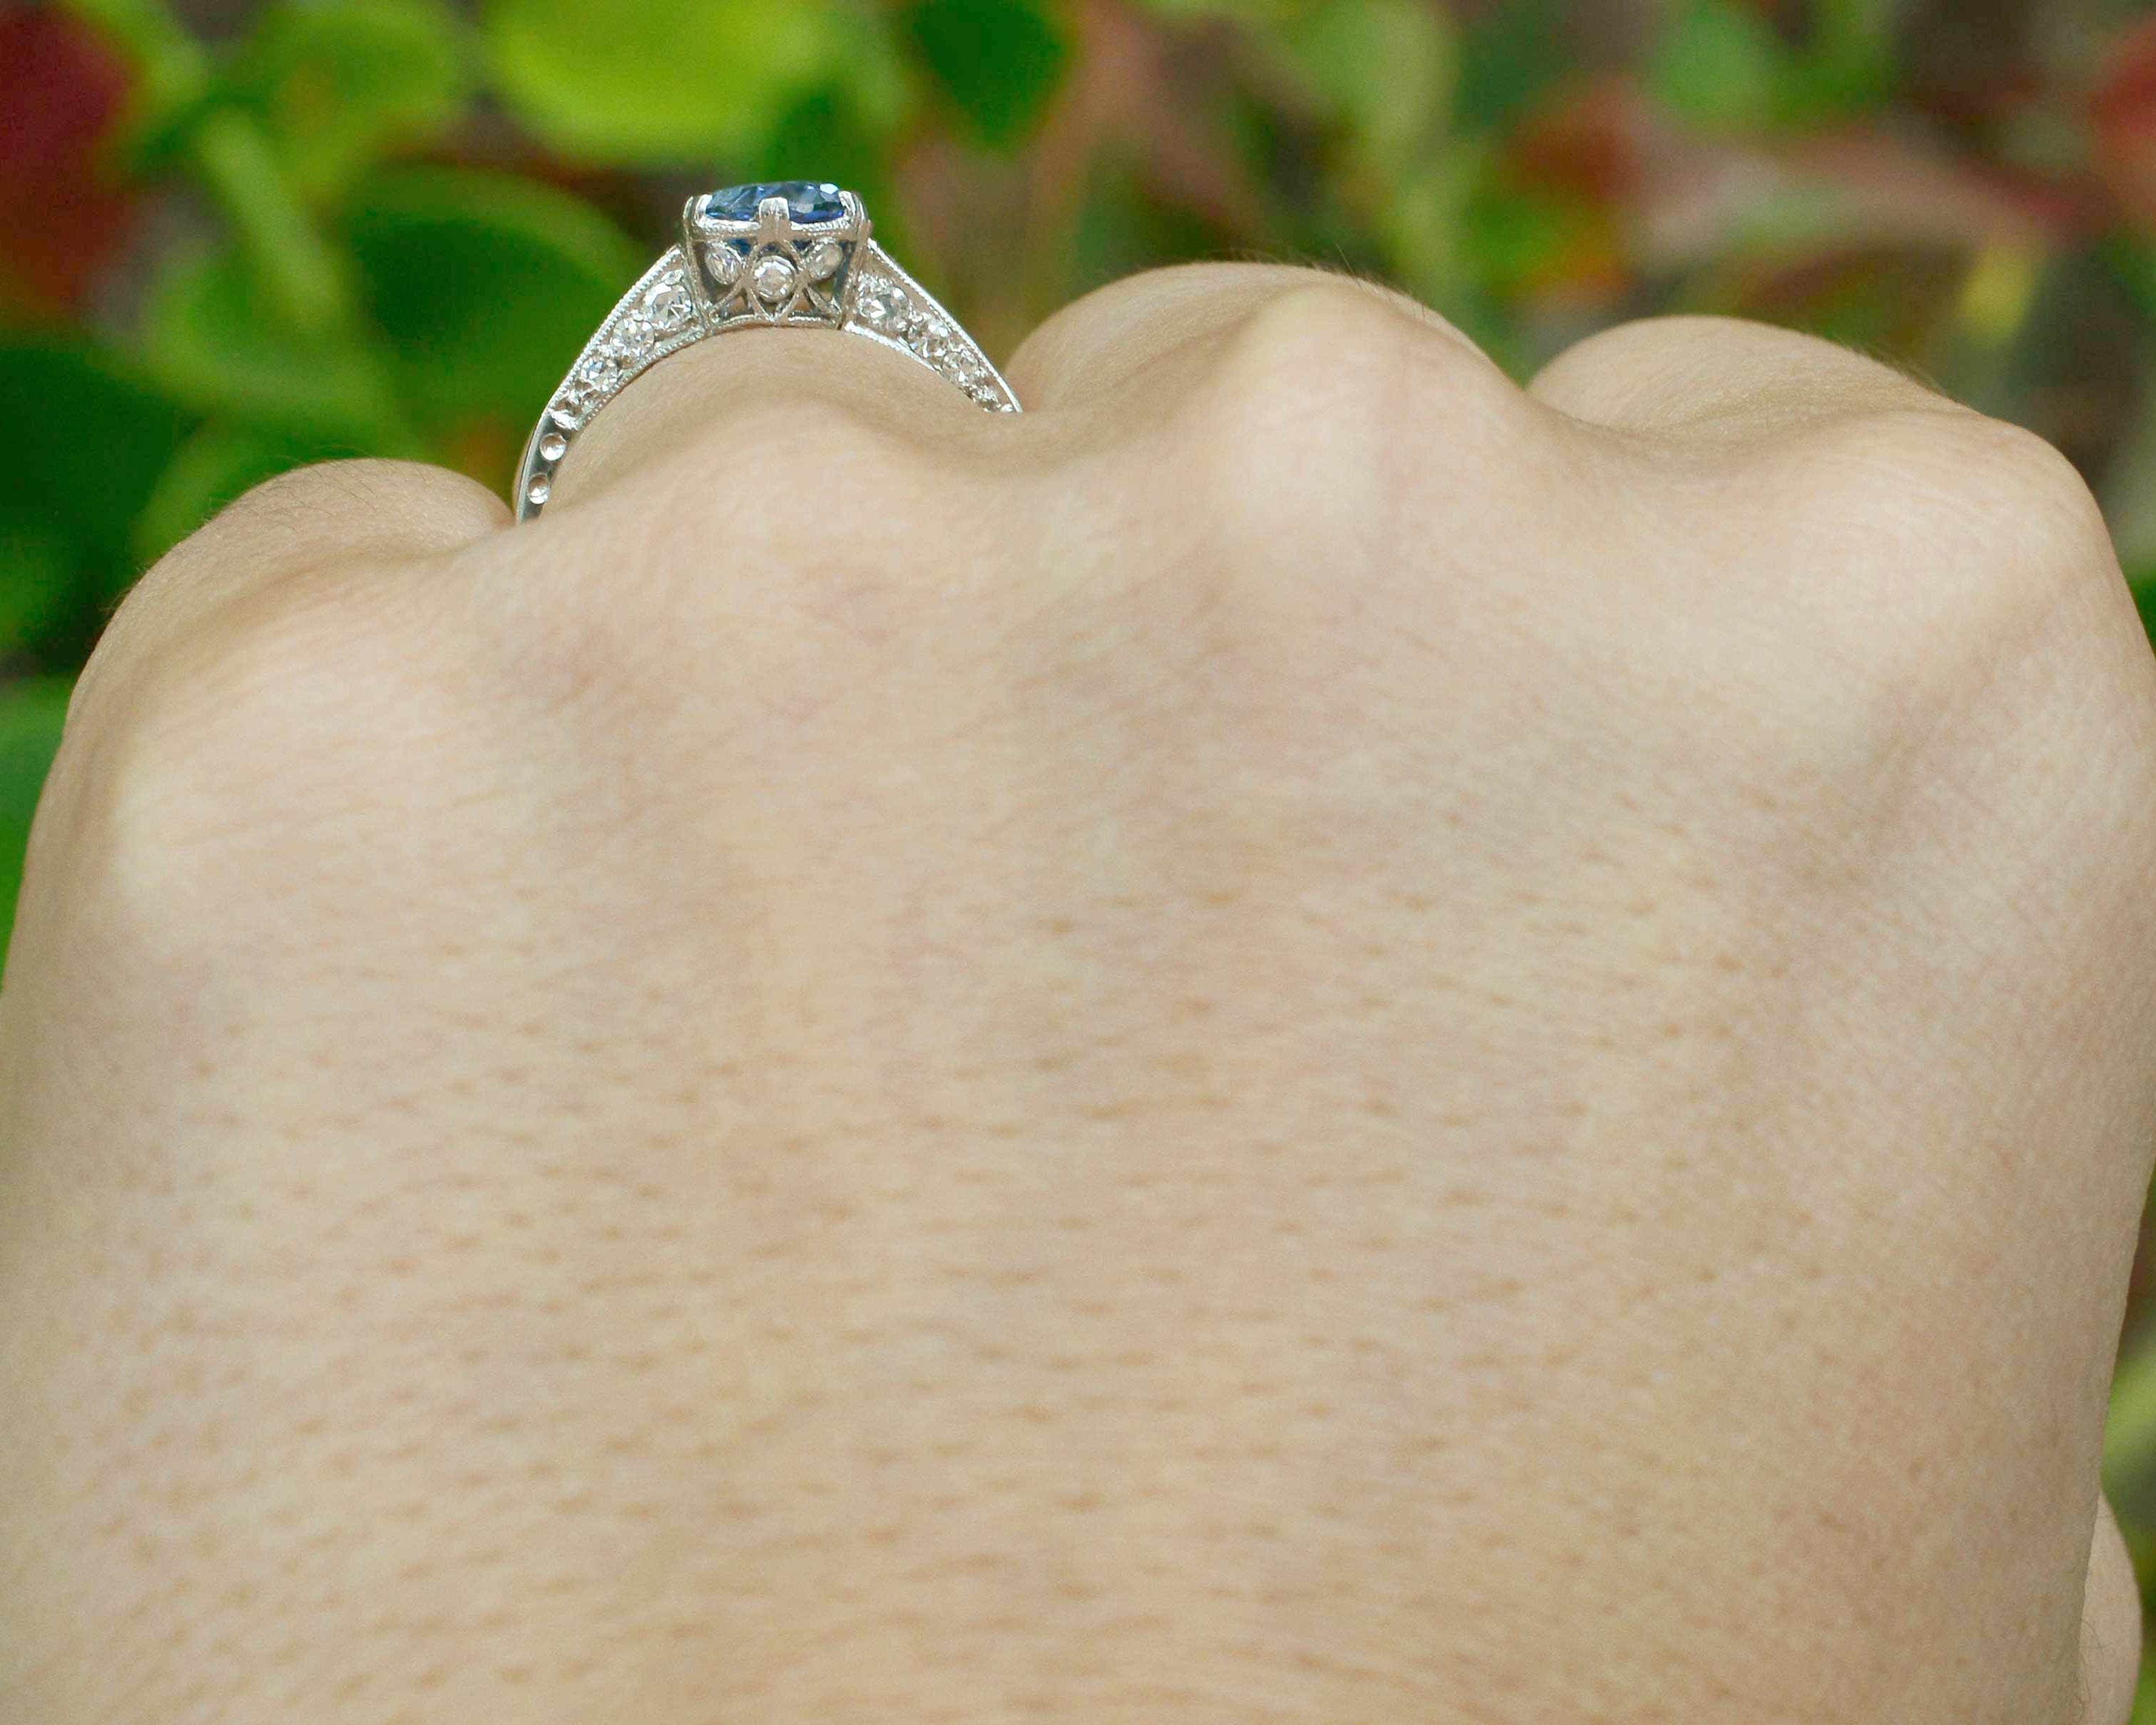 6 prongs support the blue ceylon sapphire platinum Art Deco solitaire engagement ring.